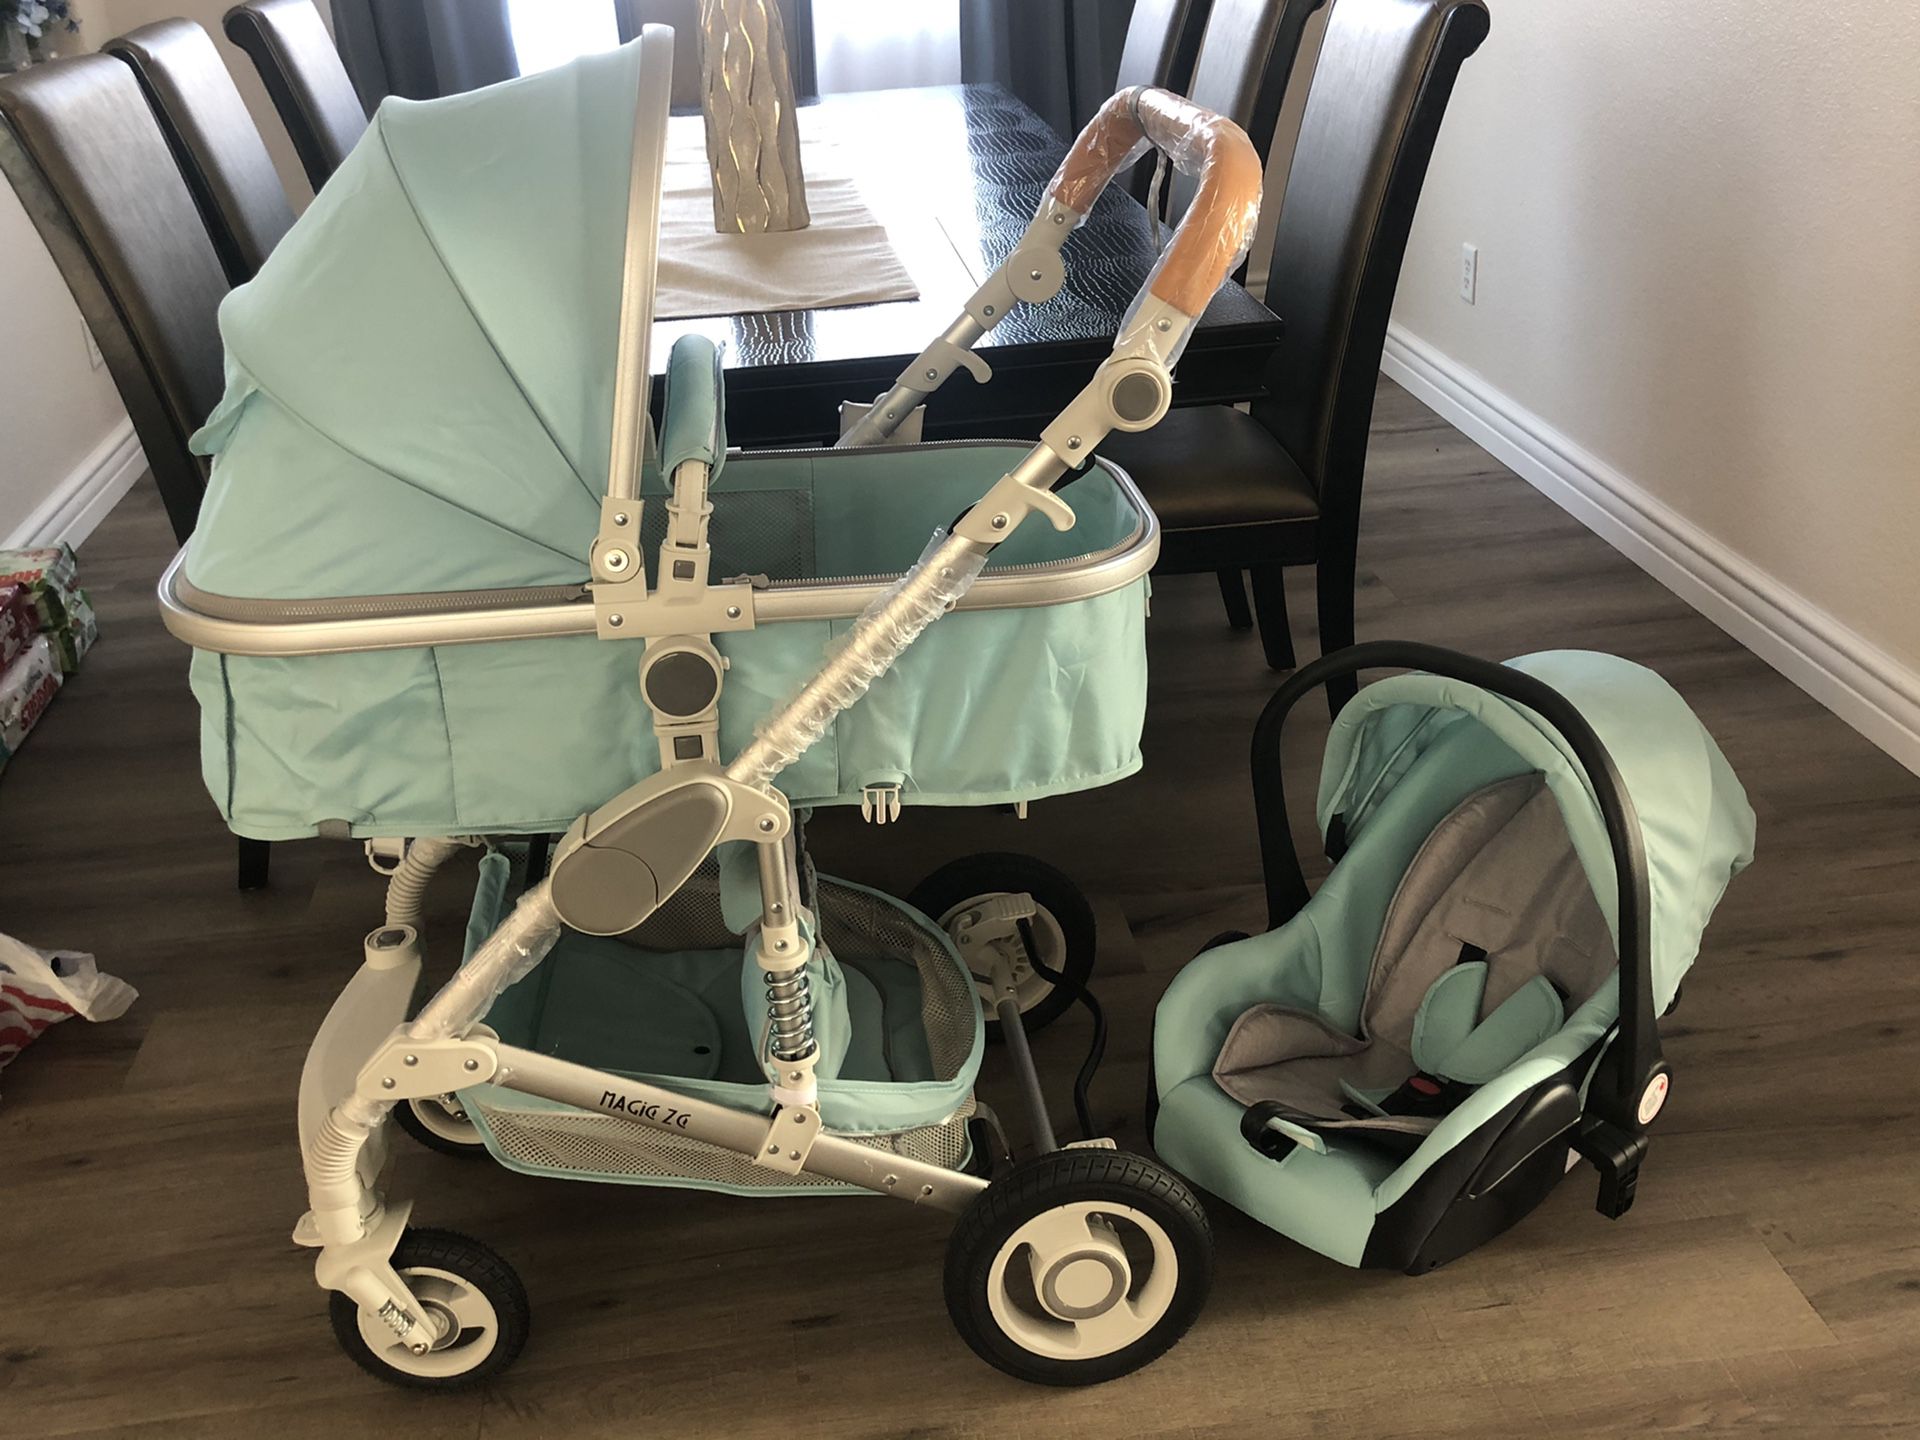 Teal Modern Baby stroller